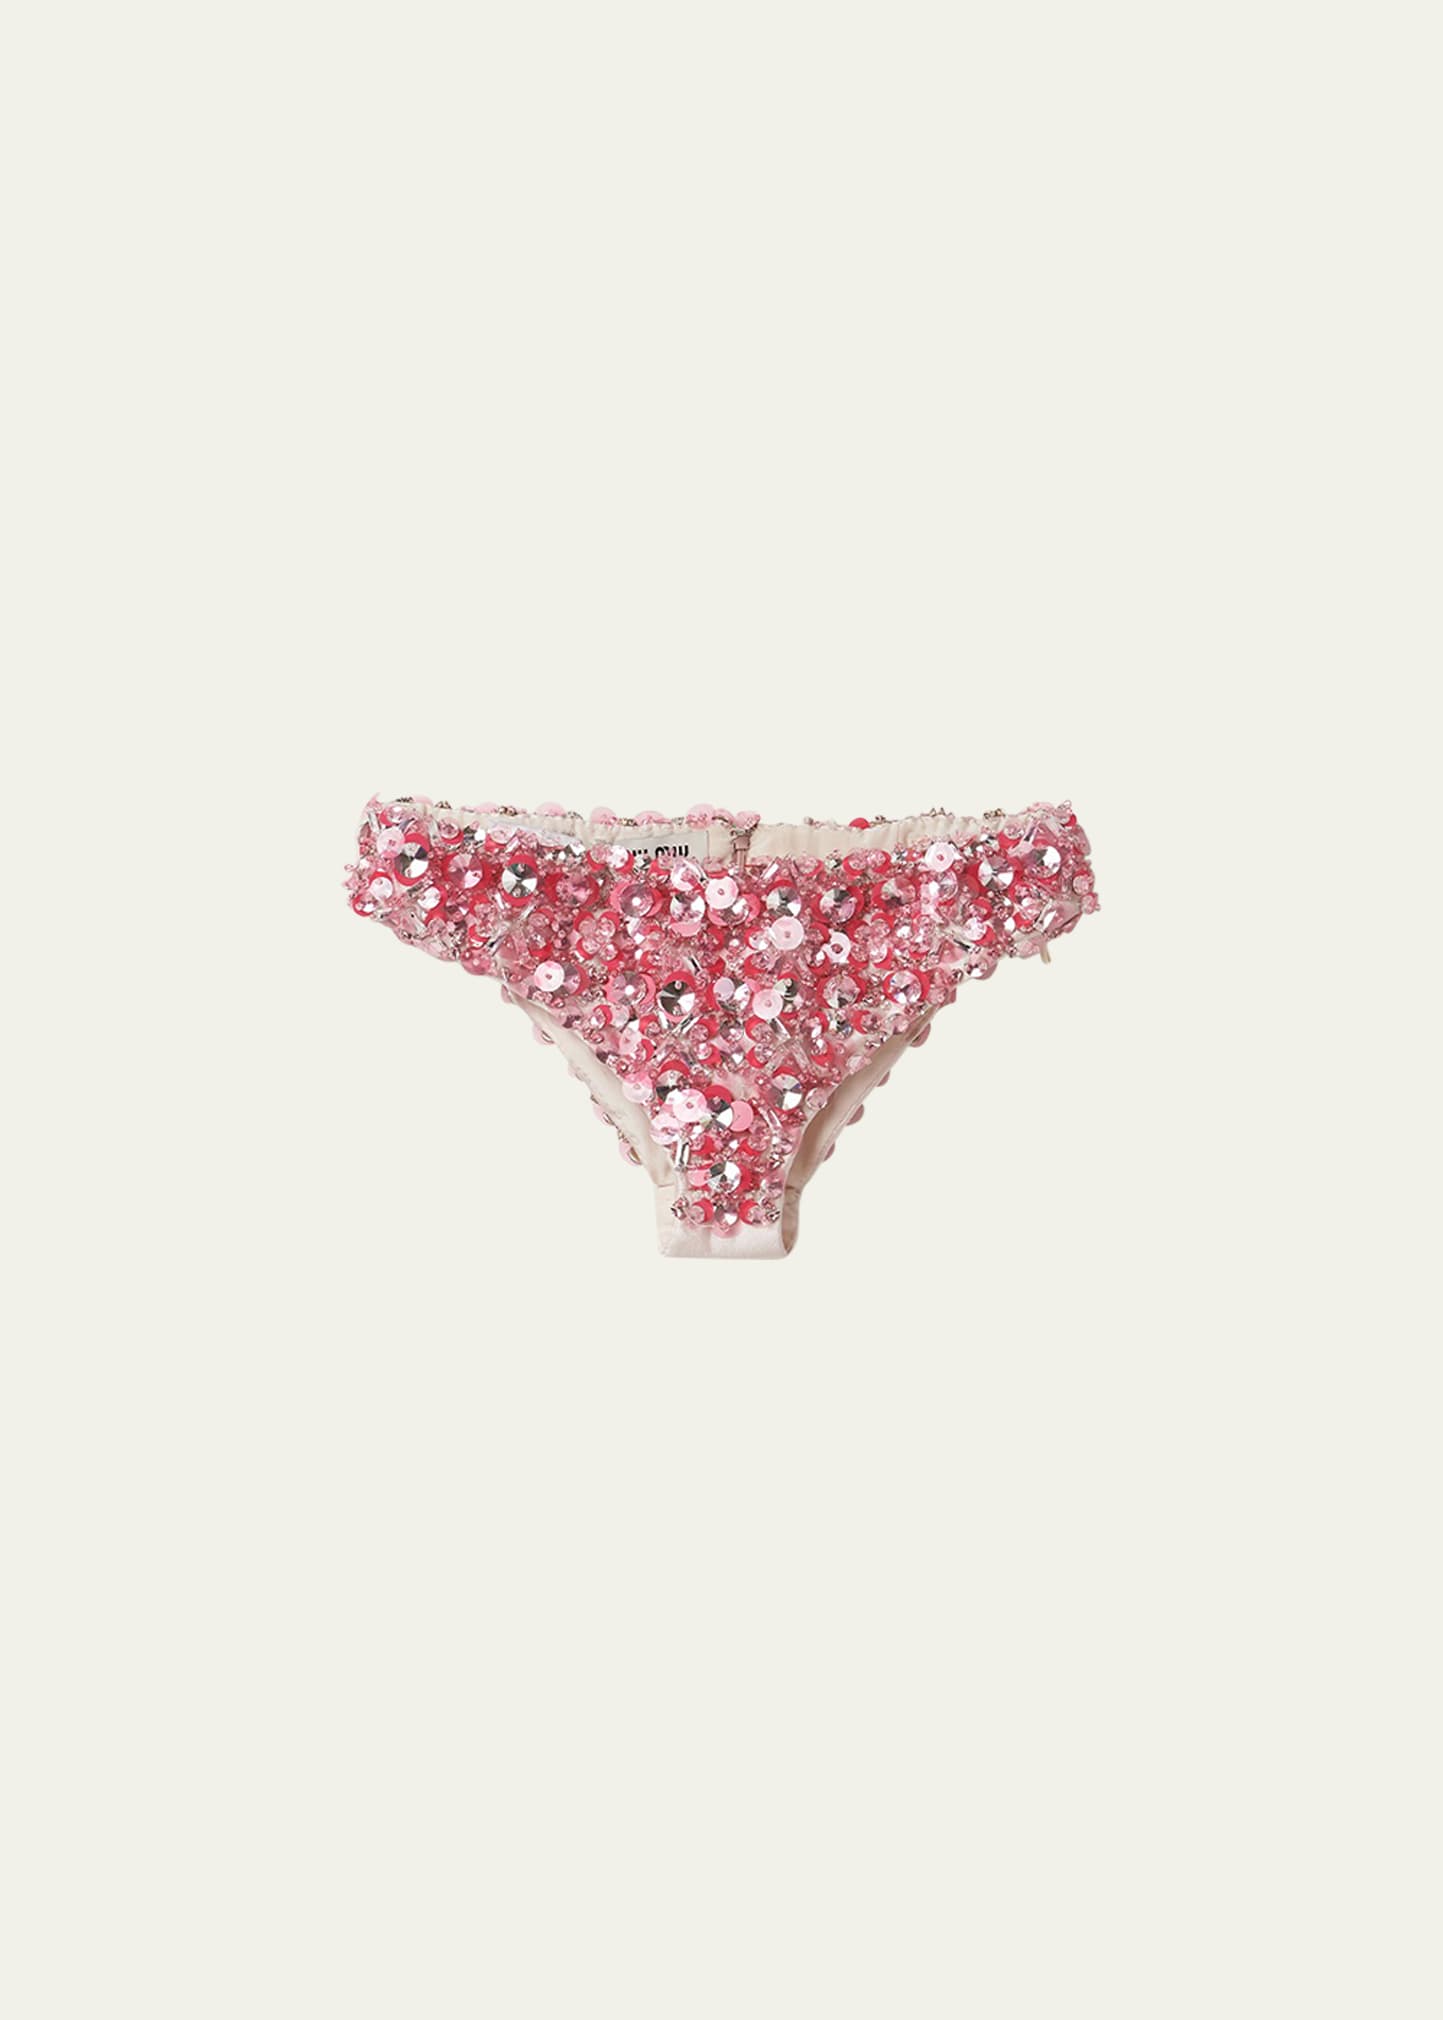 Miu Miu $5,600 panties may be most expensive underwear ever